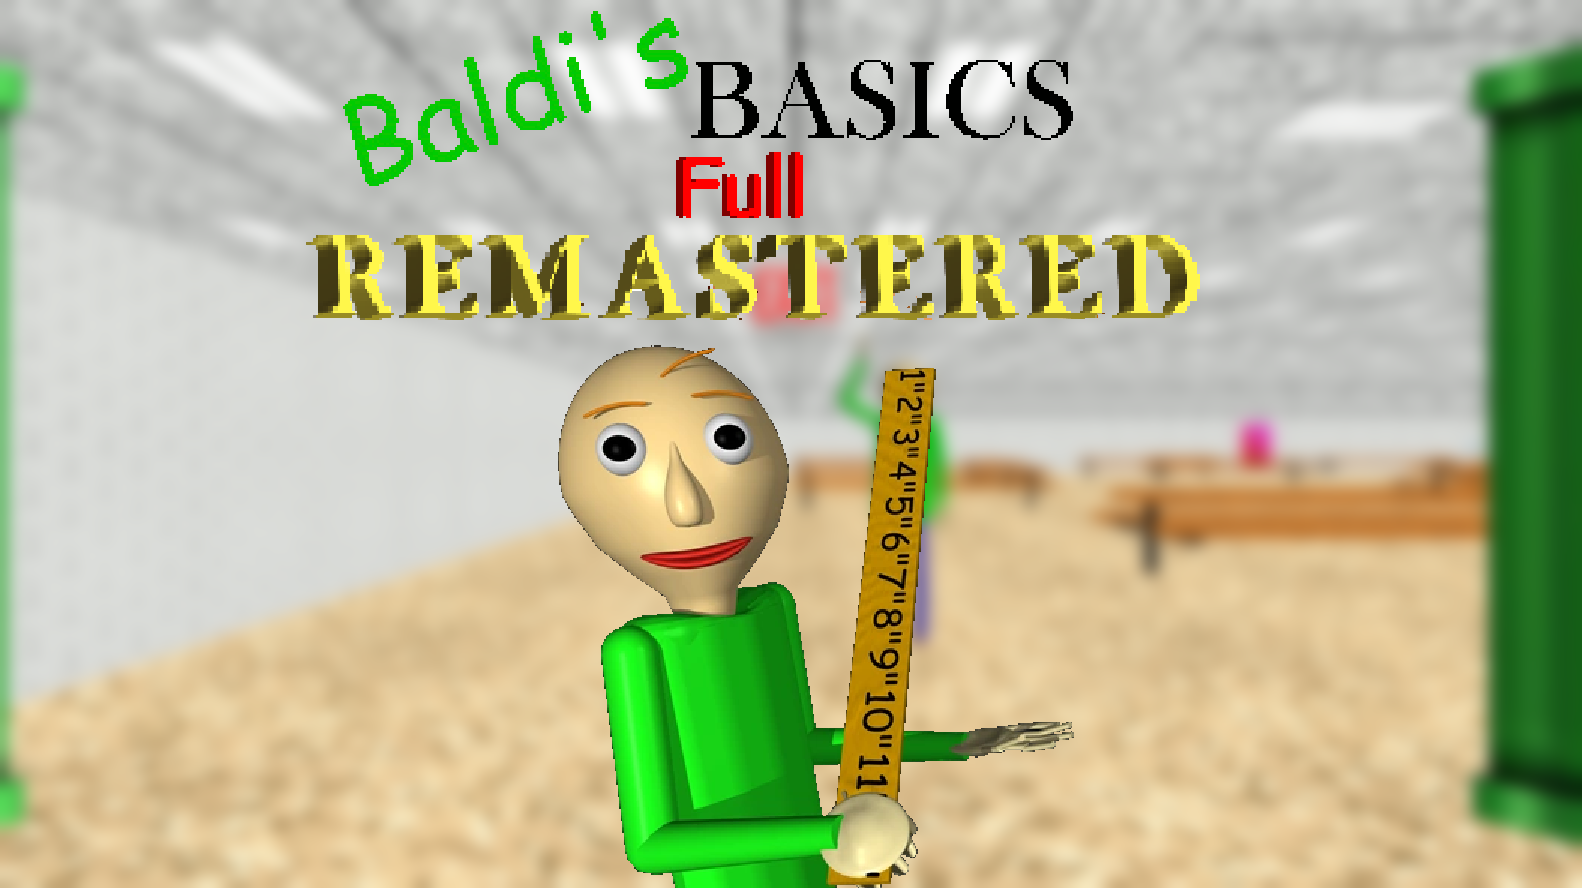 Baldi's Basics Classic Remastered - The Office.